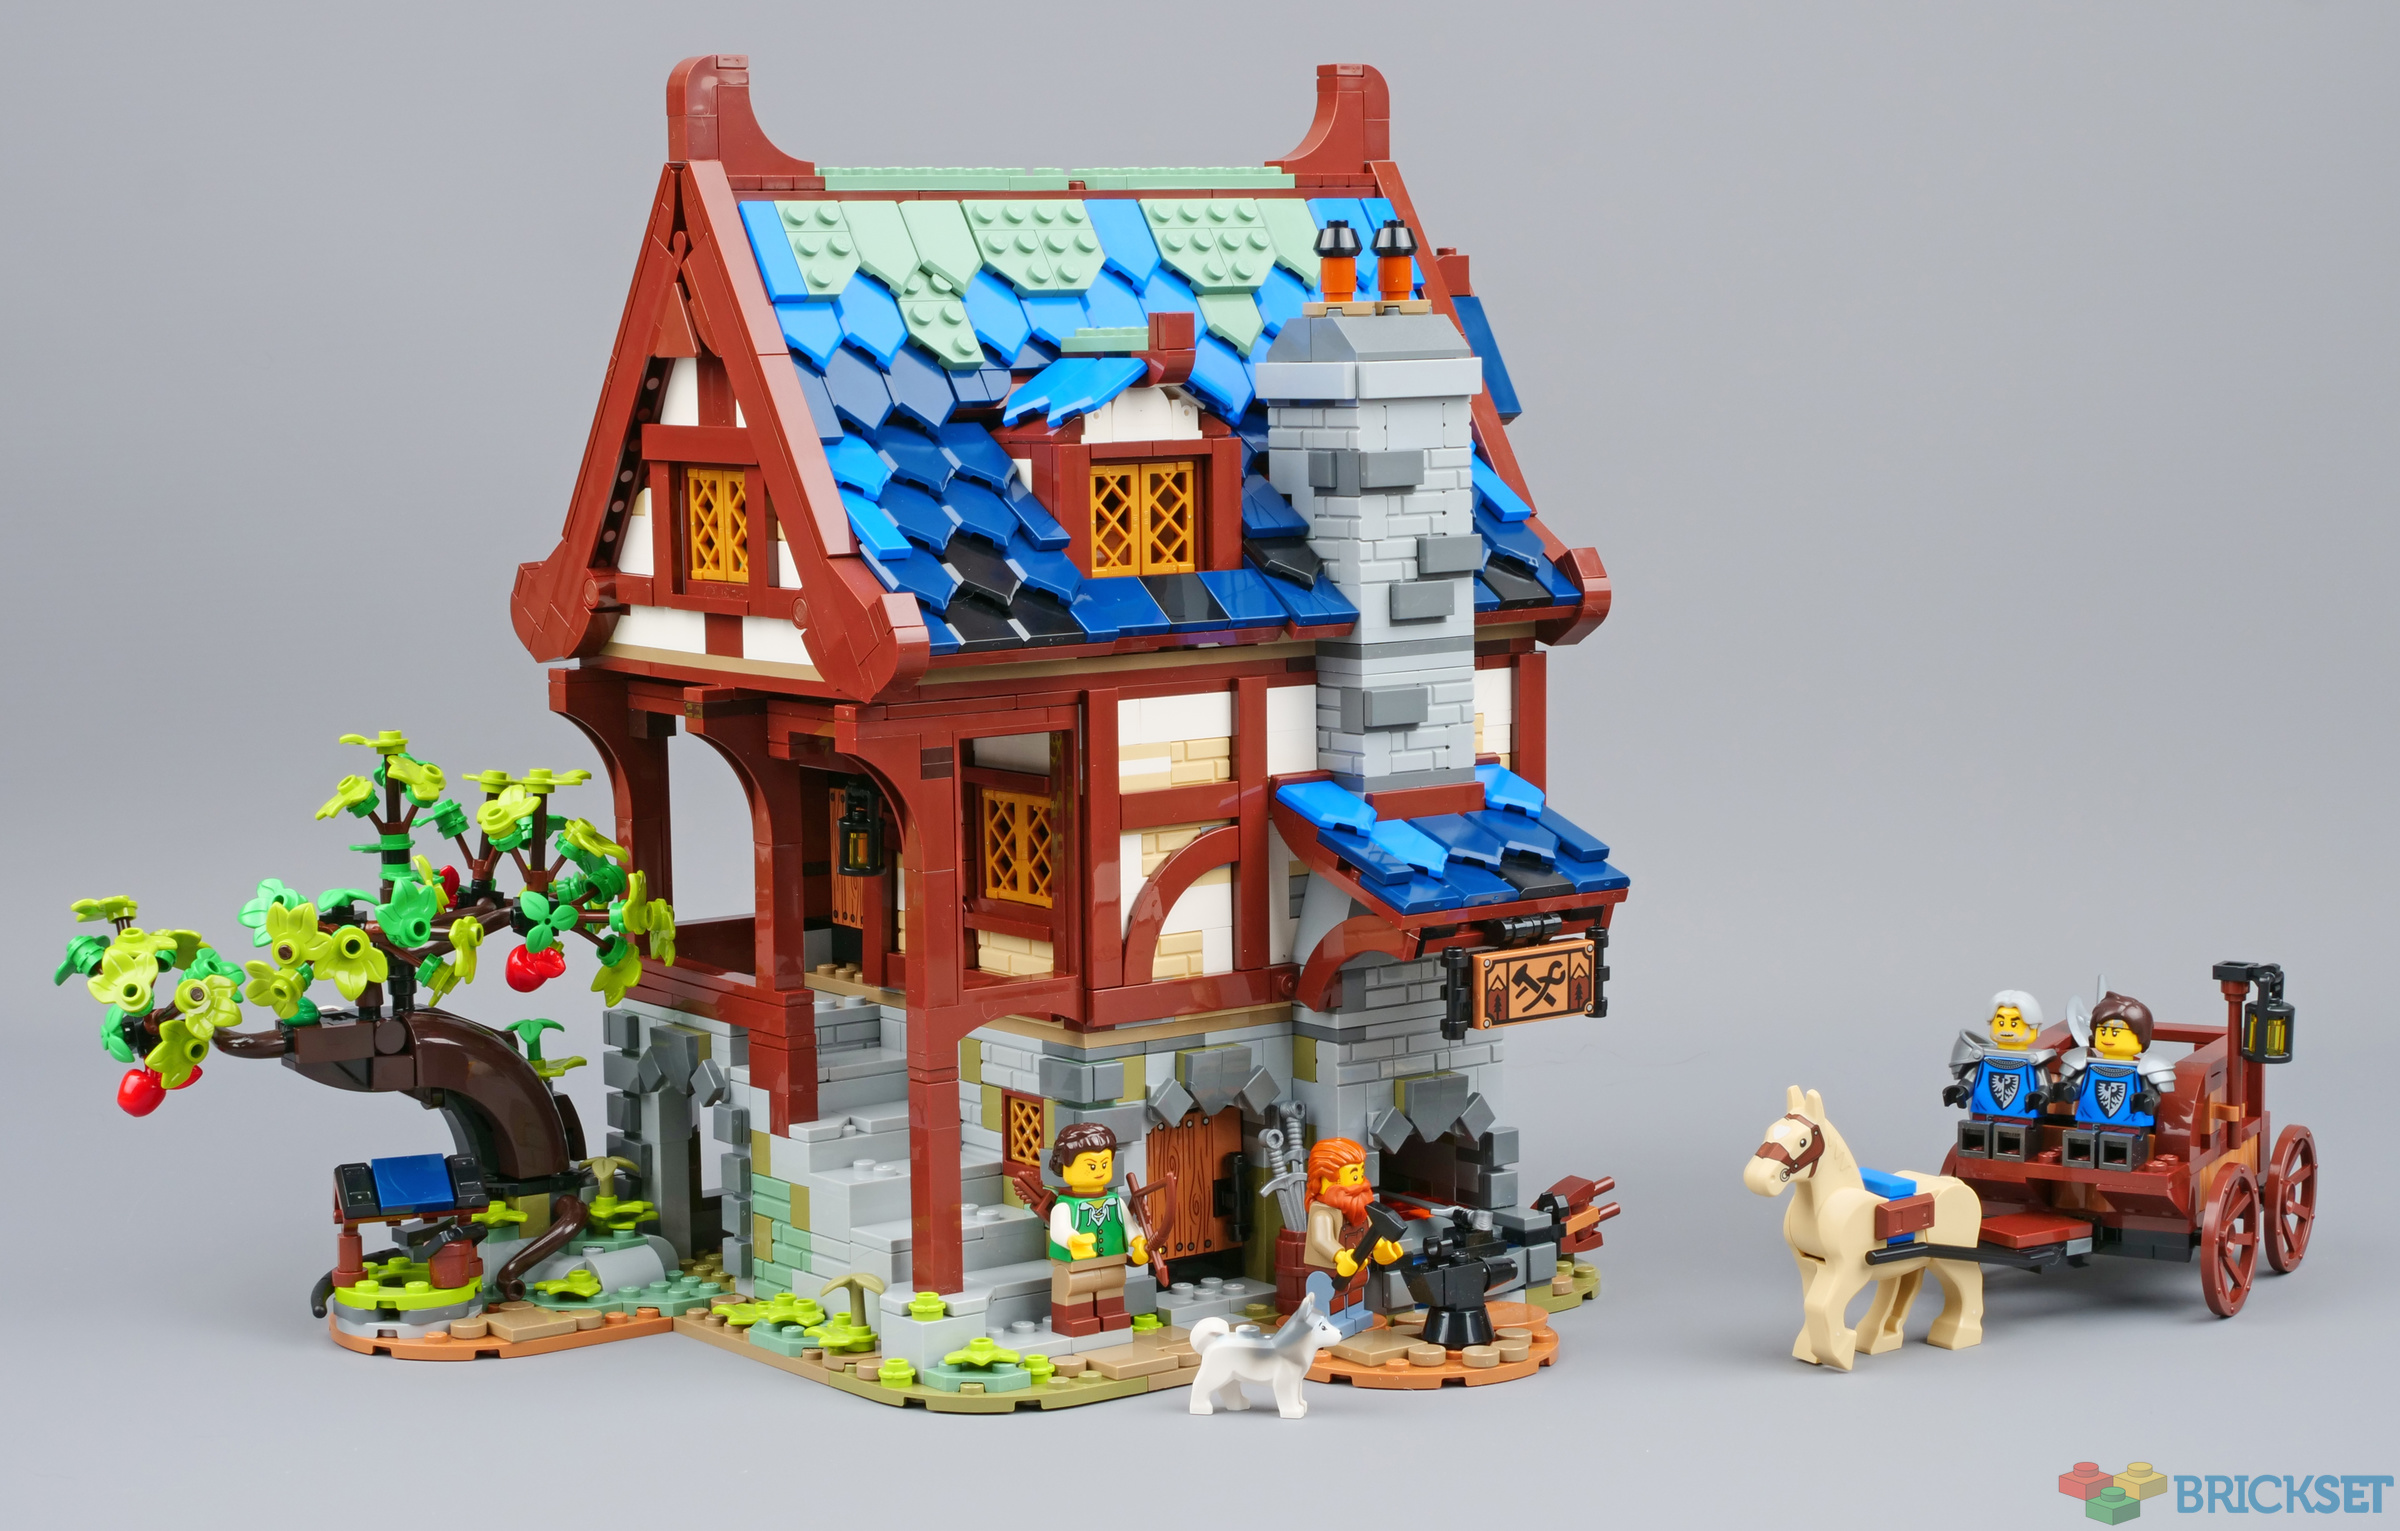 LEGO 21325 Medieval Blacksmith review | Brickset